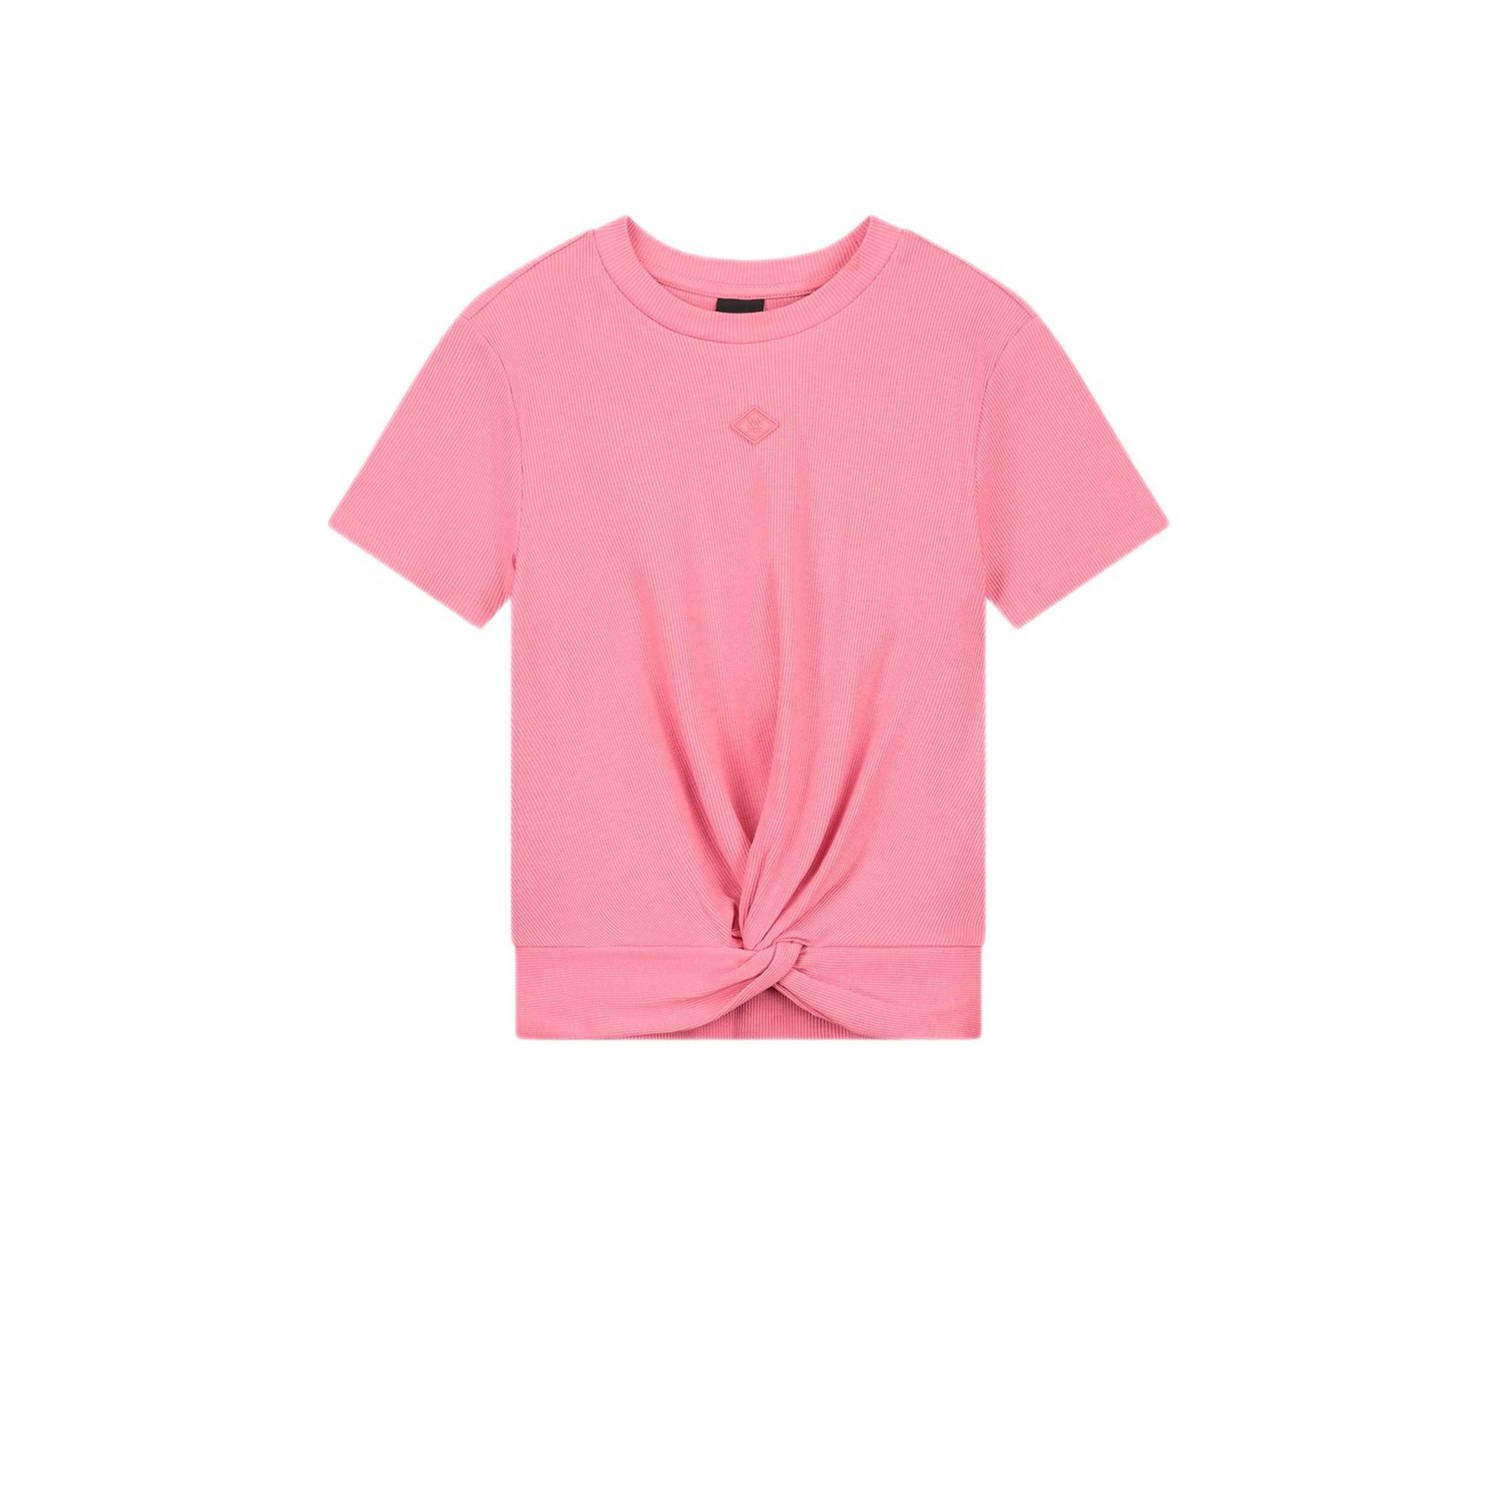 NIK&NIK T-shirt Knot roze Meisjes Stretchkatoen Ronde hals Effen 128